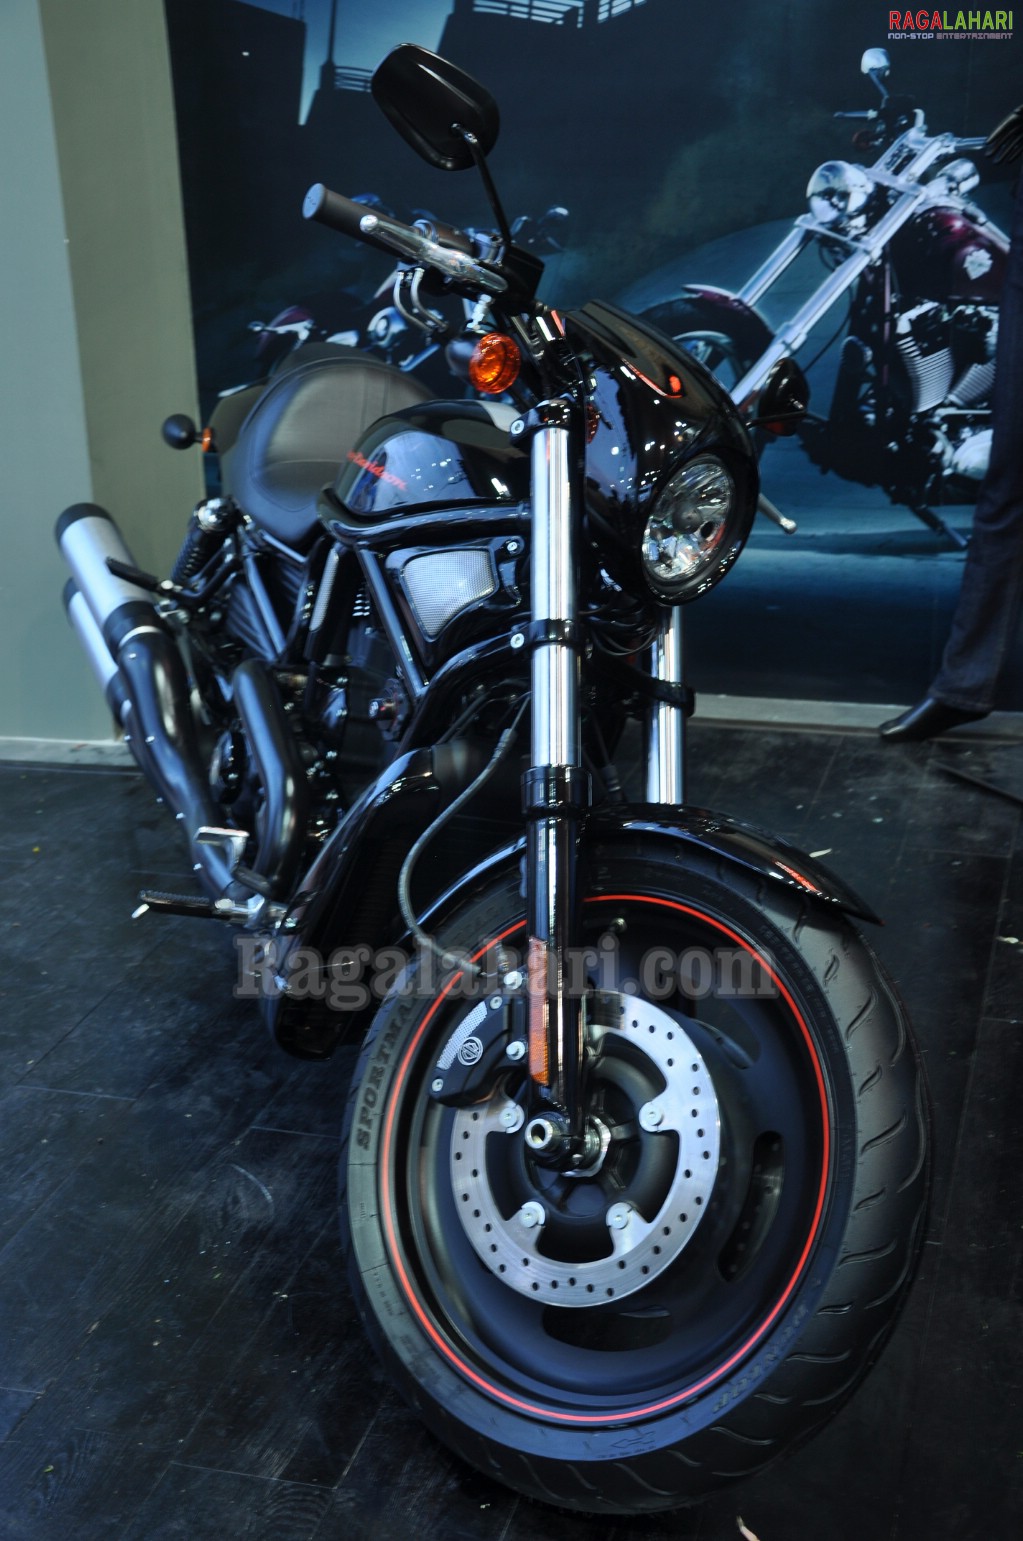 NTR @ Harley Davidson Motors Launch, Hyd